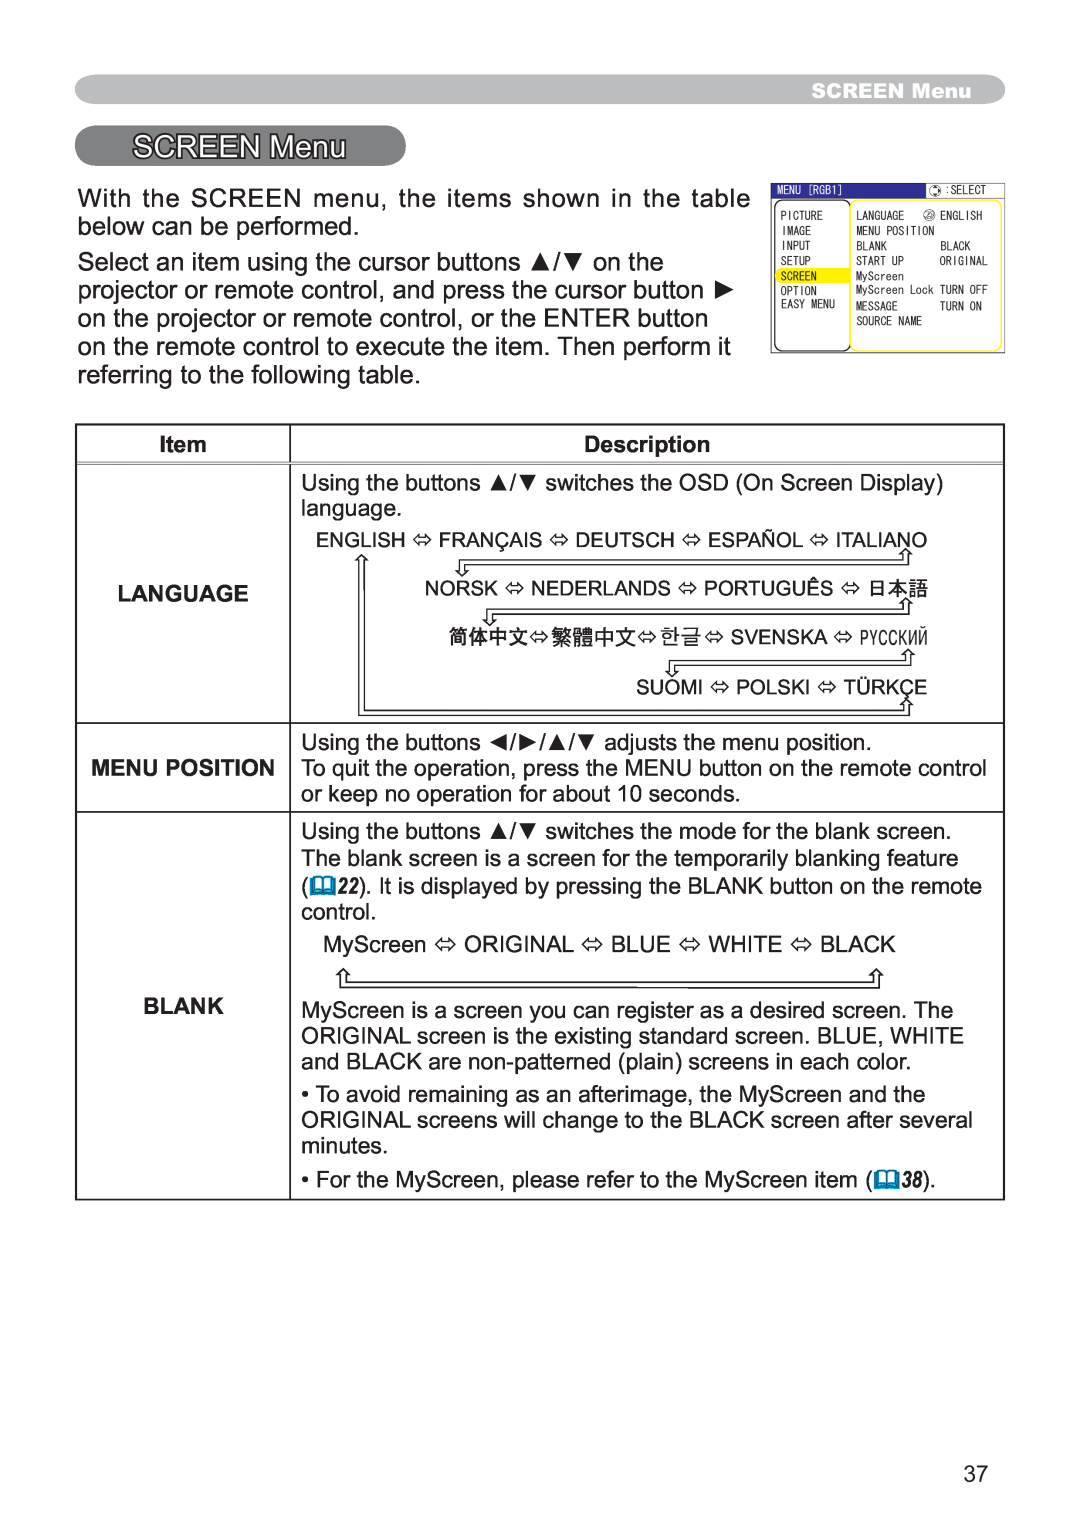 Hitachi CP-X251 user manual SCREEN Menu, Description, Language, Blank 